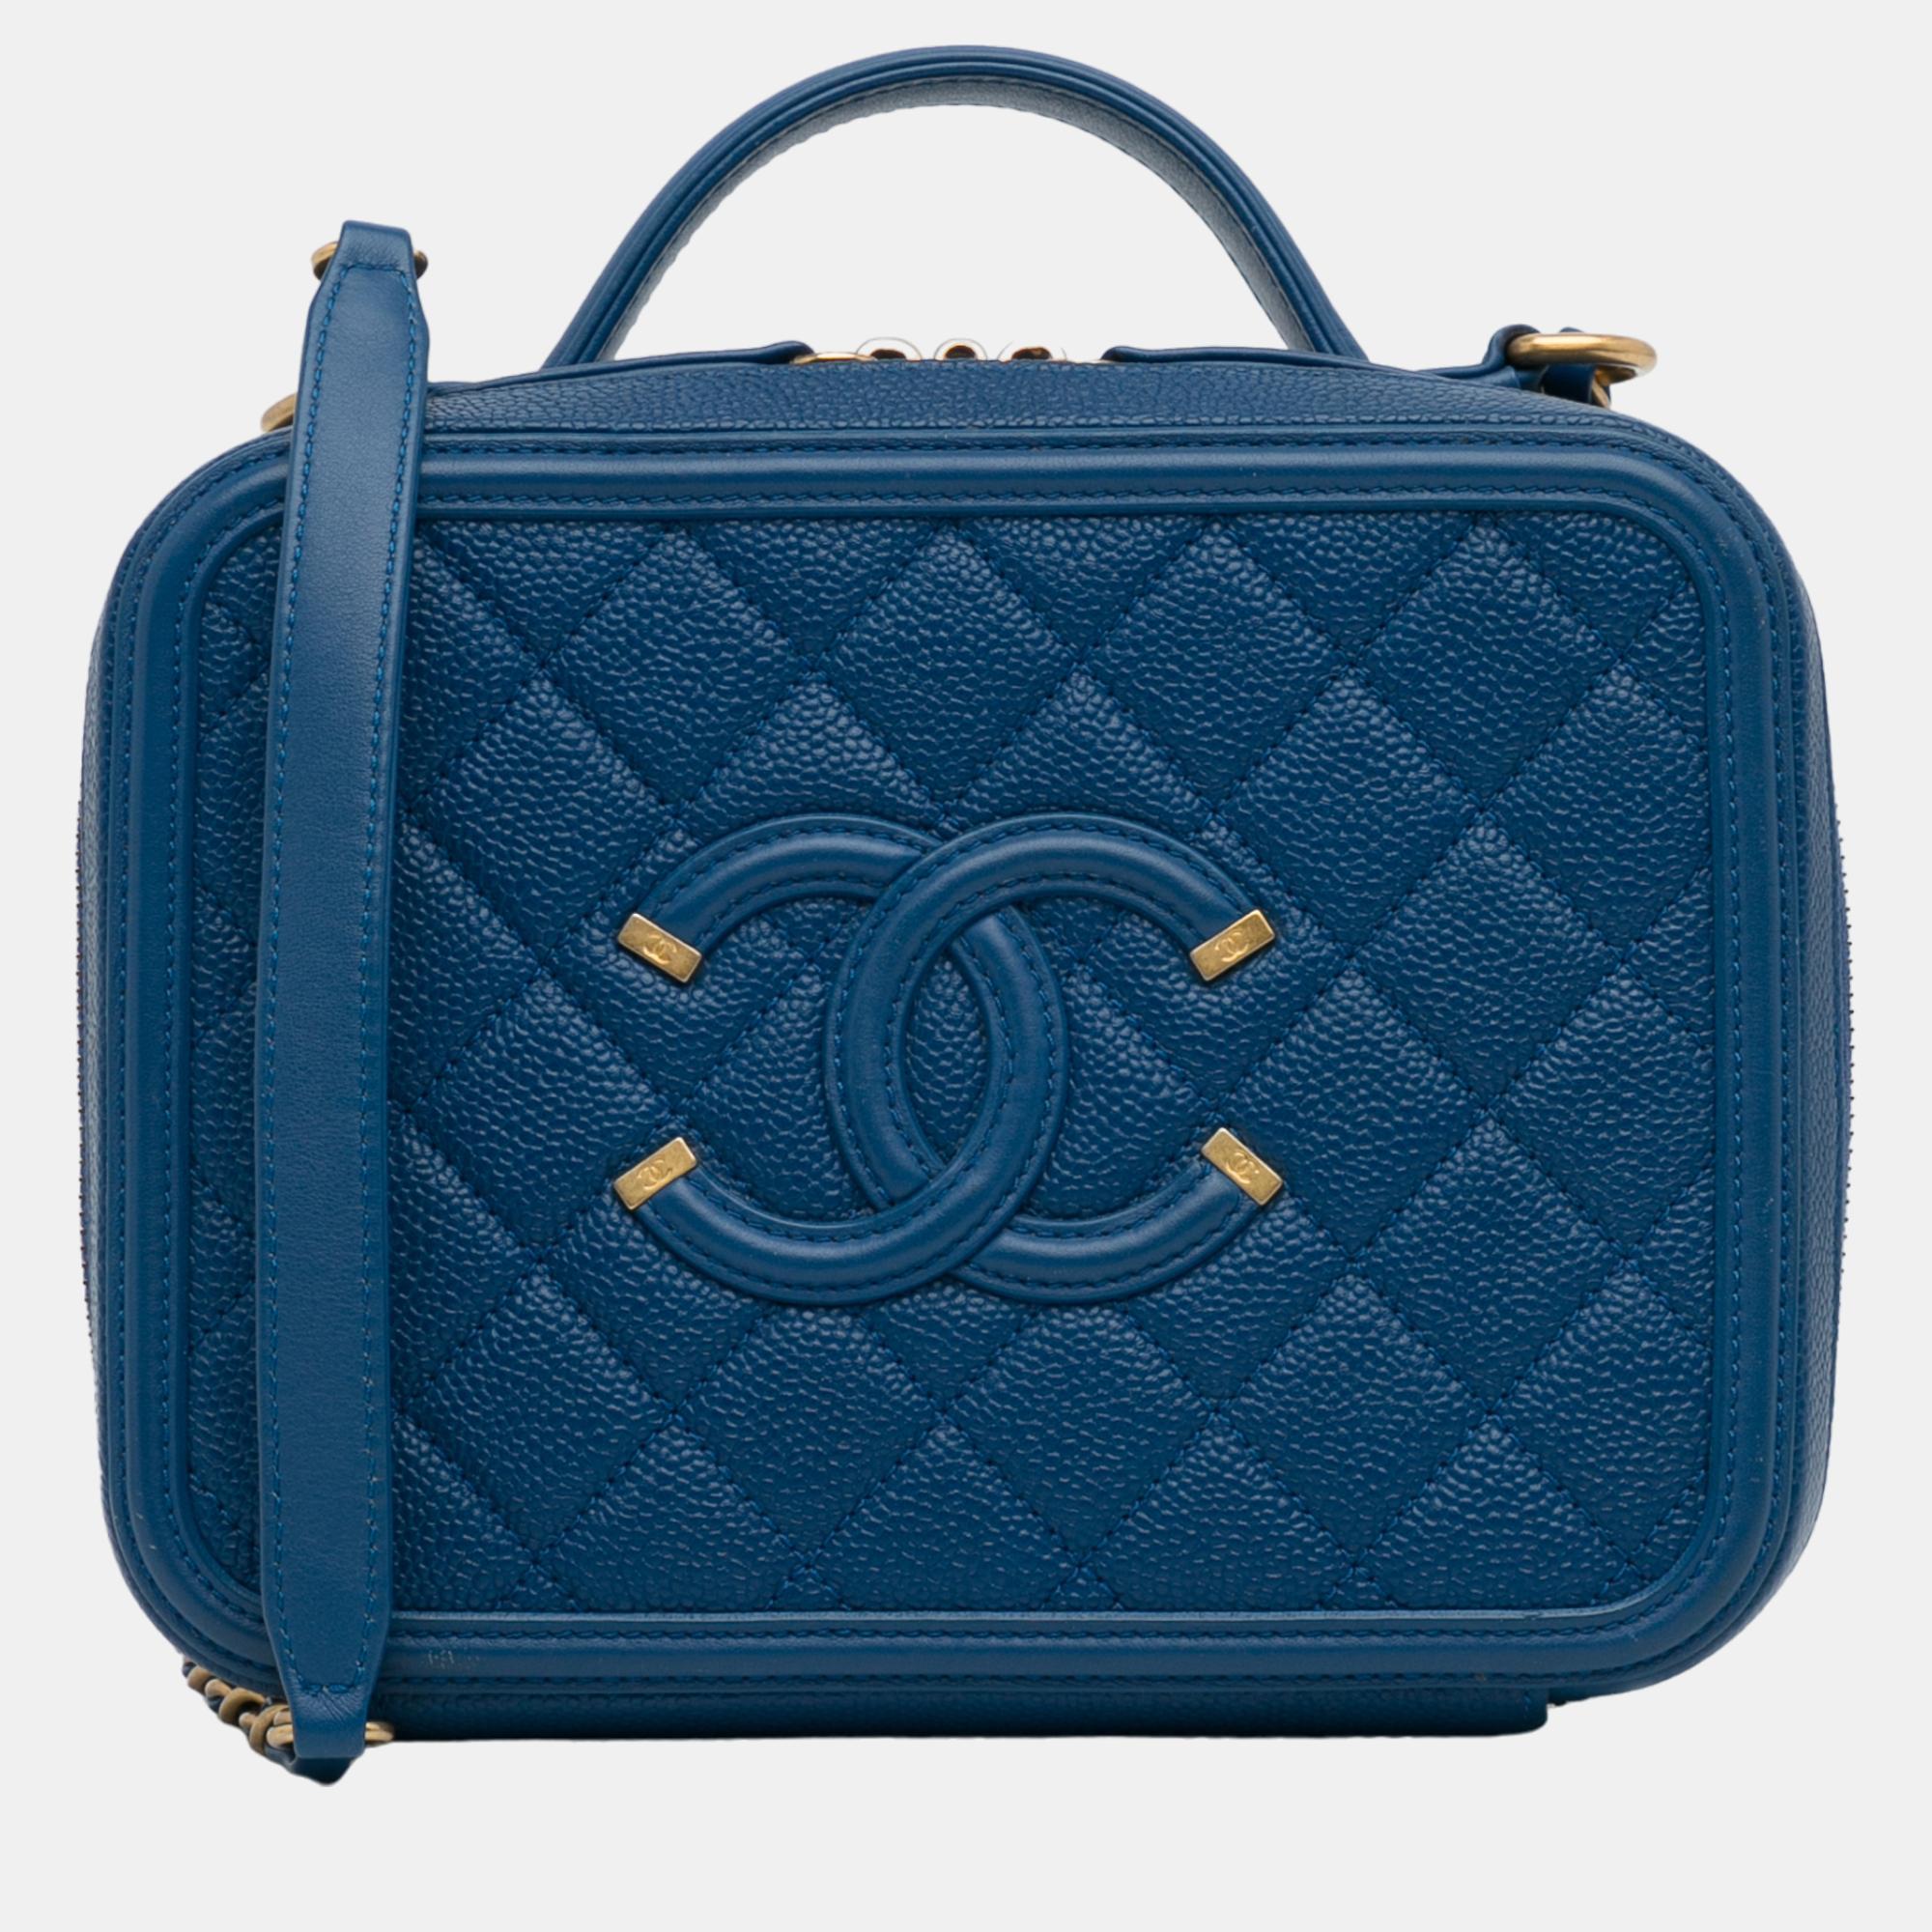 Chanel blue medium cc filigree caviar vanity case